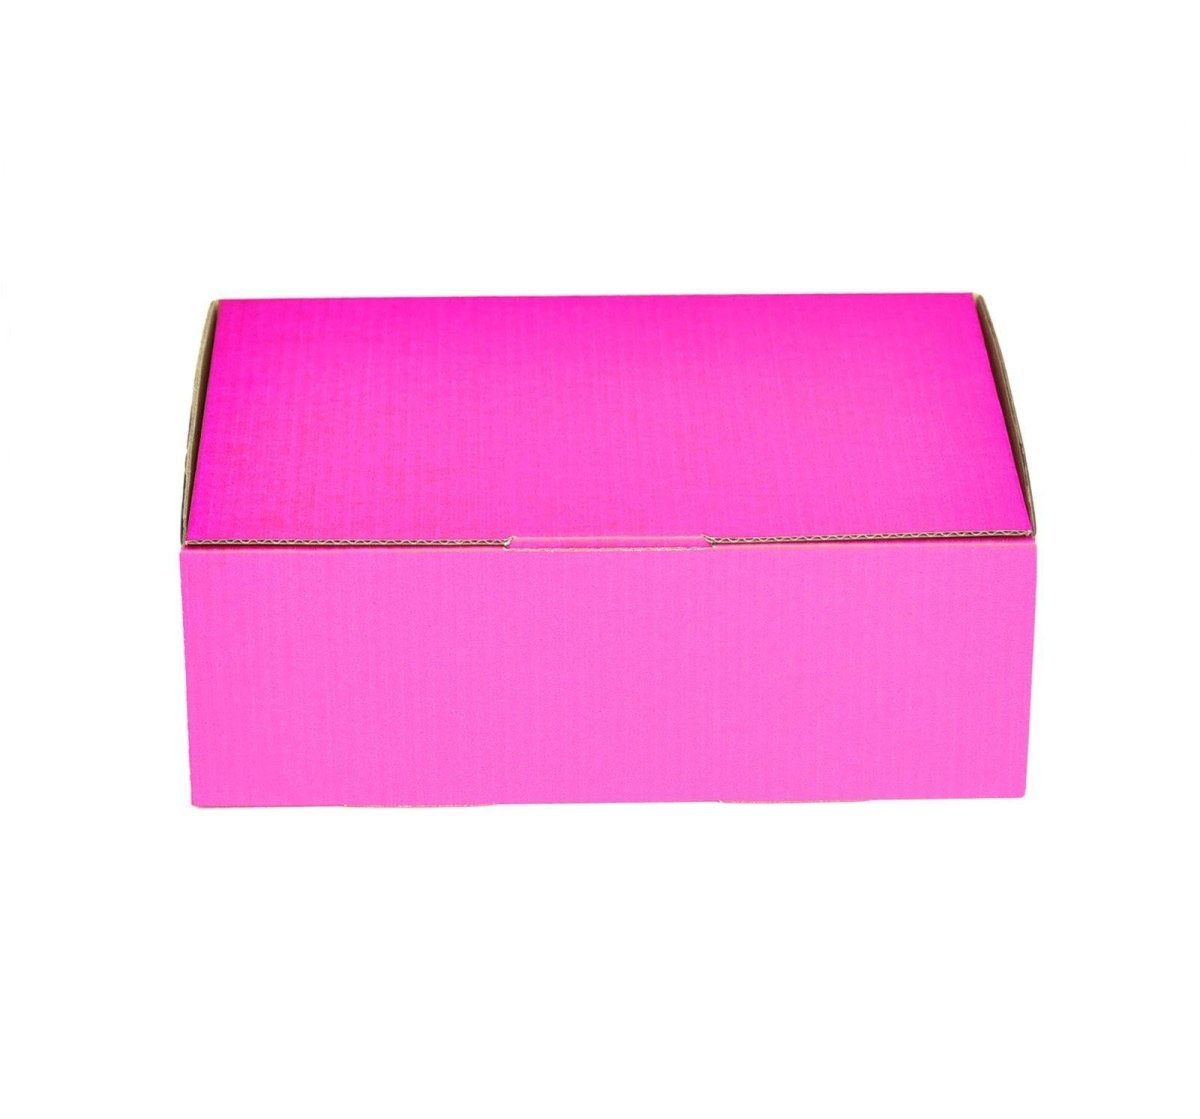 BoxMore Hot Pink A4 Mailing Box 310 x 230 x 105mm B338